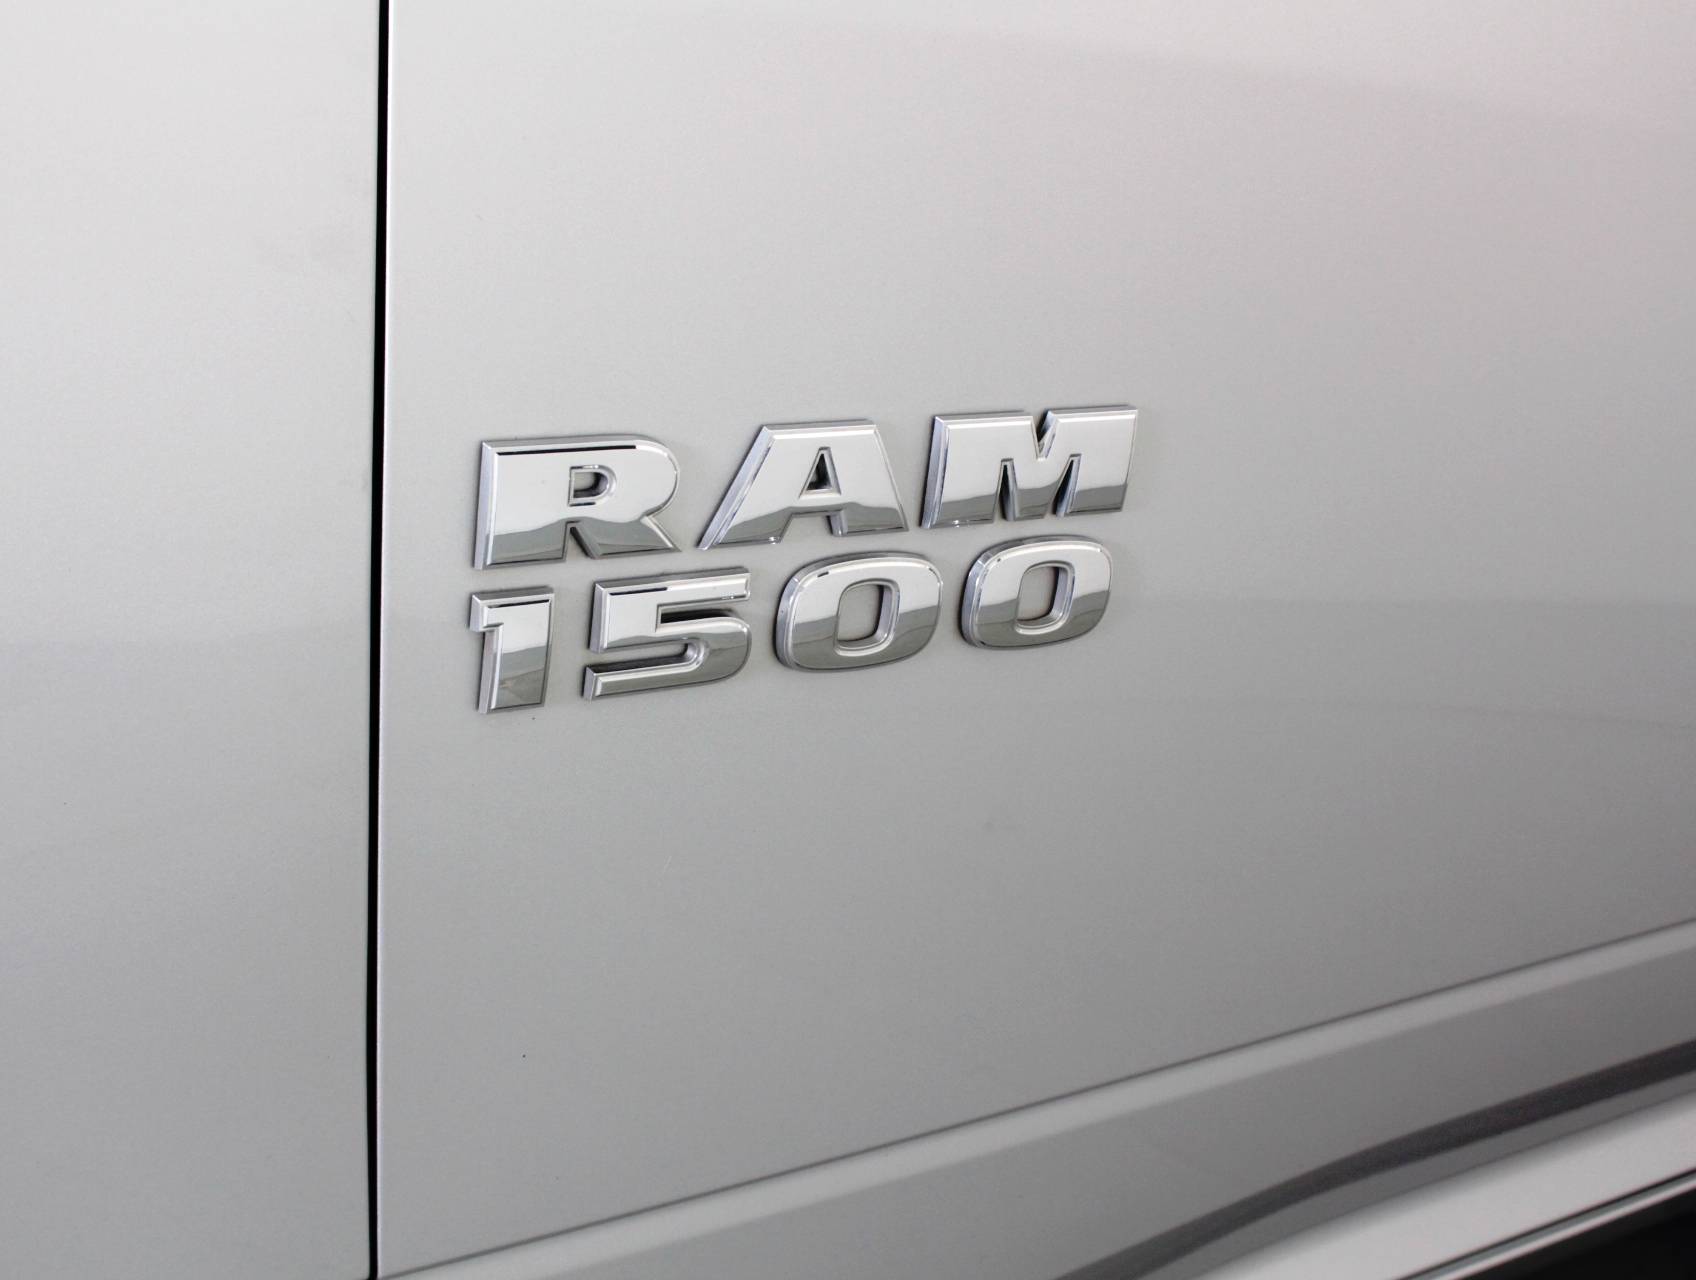 Florida Fine Cars - Used RAM 1500 2015 MIAMI TRADESMAN